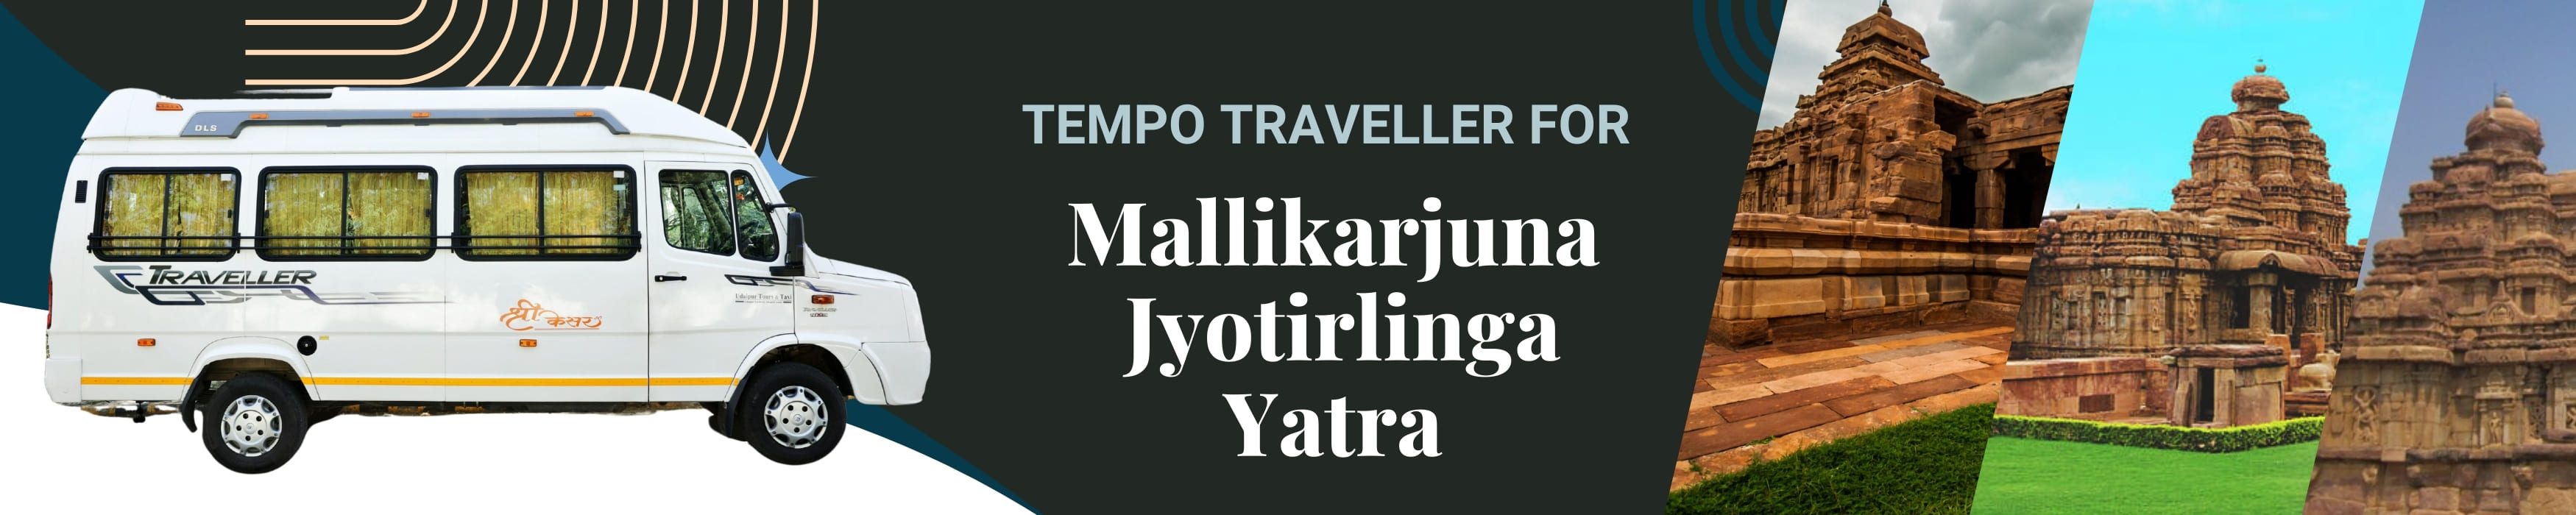 Hire Tempo Traveller For Mallikarjuna Jyotirlinga Temple